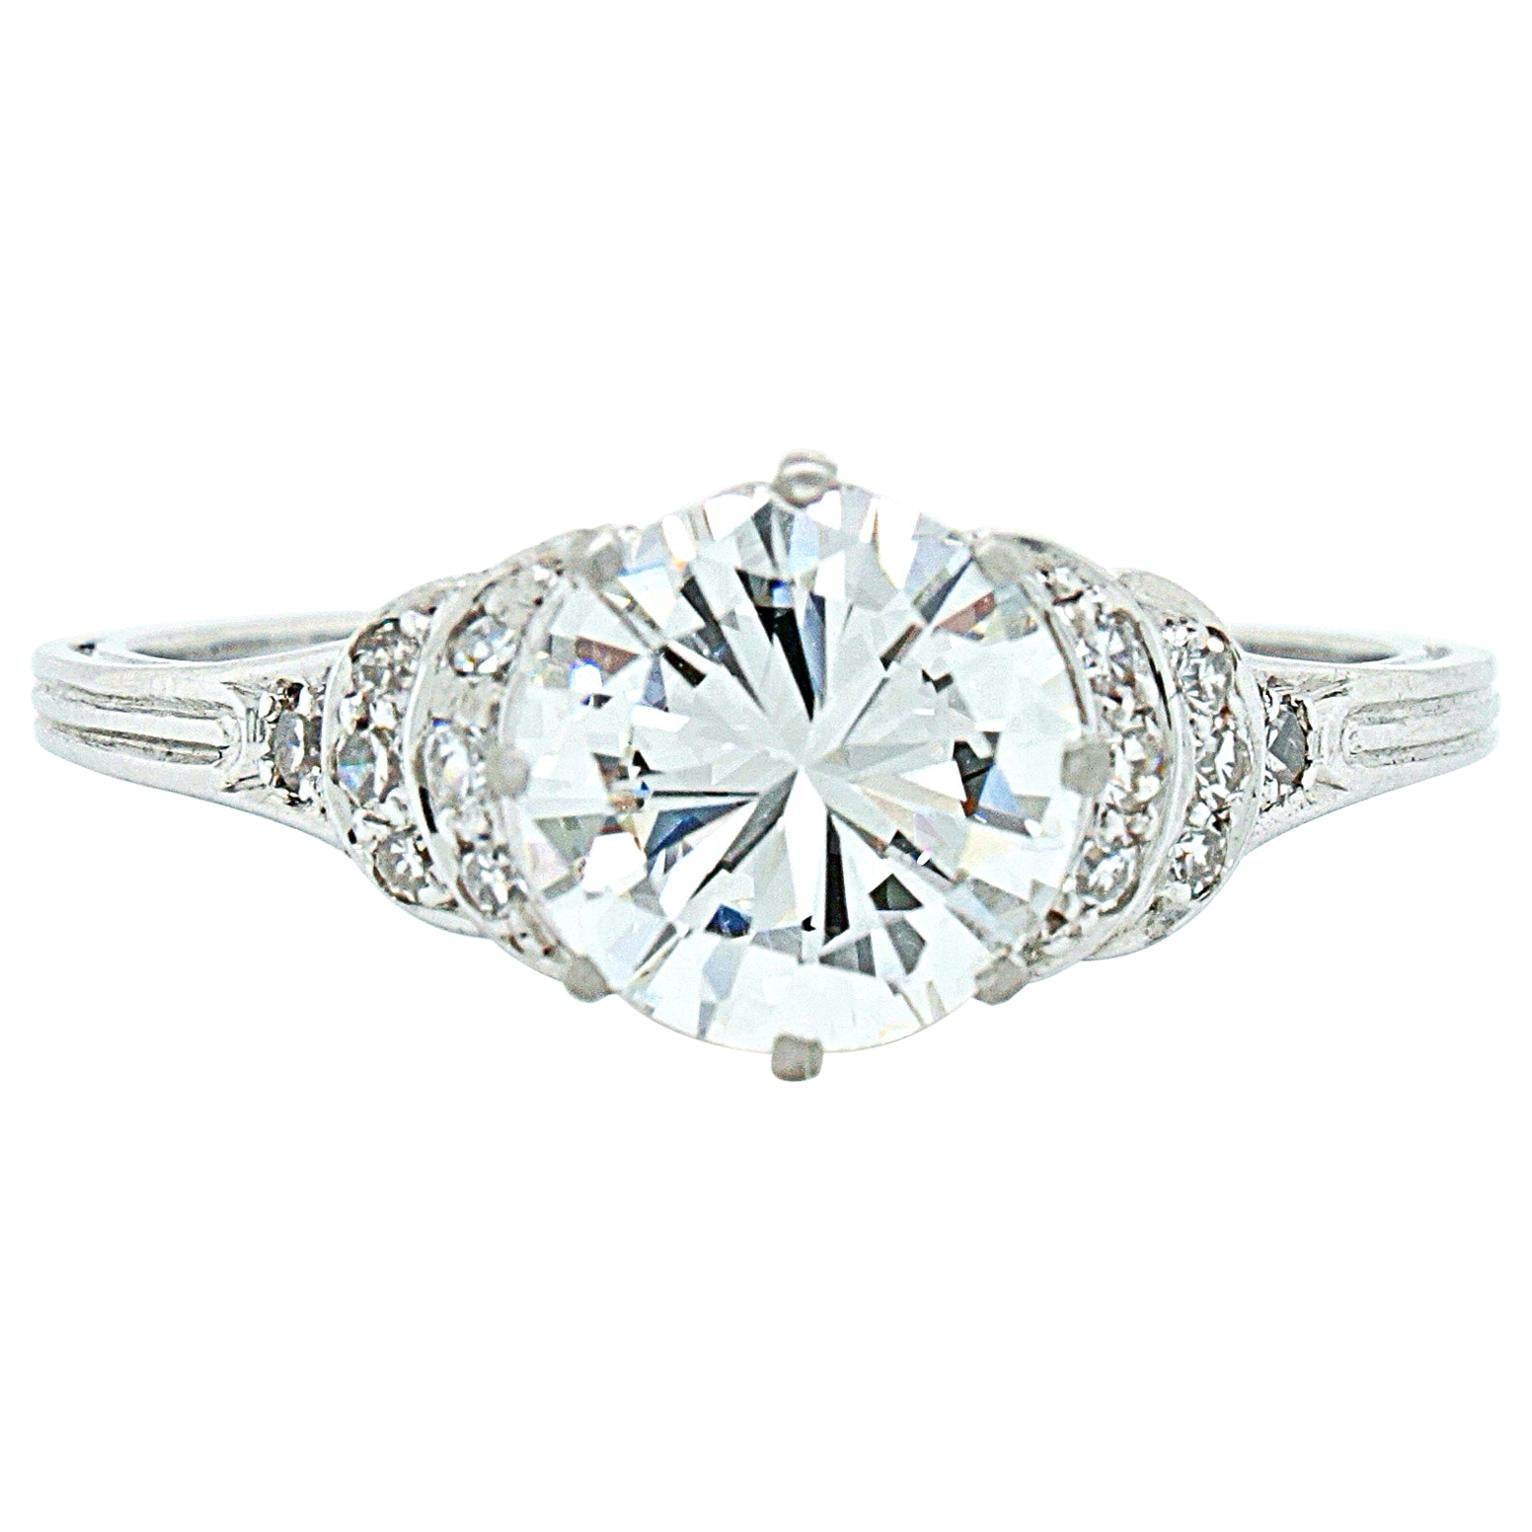 1.60 Carat, G/H-VS Diamond Solitaire Art Deco Ring, circa 1920s